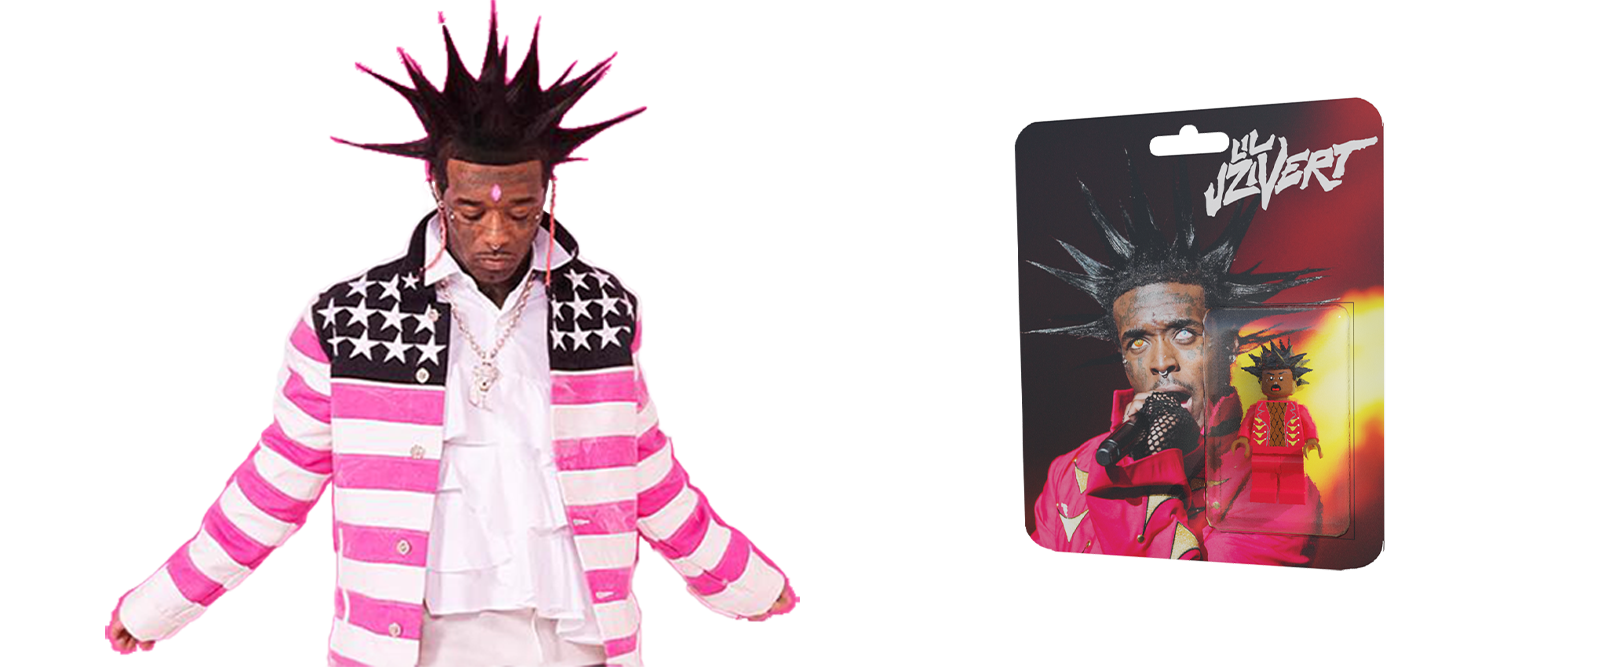 Lil Uzi Vert rockin Pink Tape merch at the WrestleMania performance 💖 📲  More Lil Uzi Vert outfits in @whatsonthestar.app